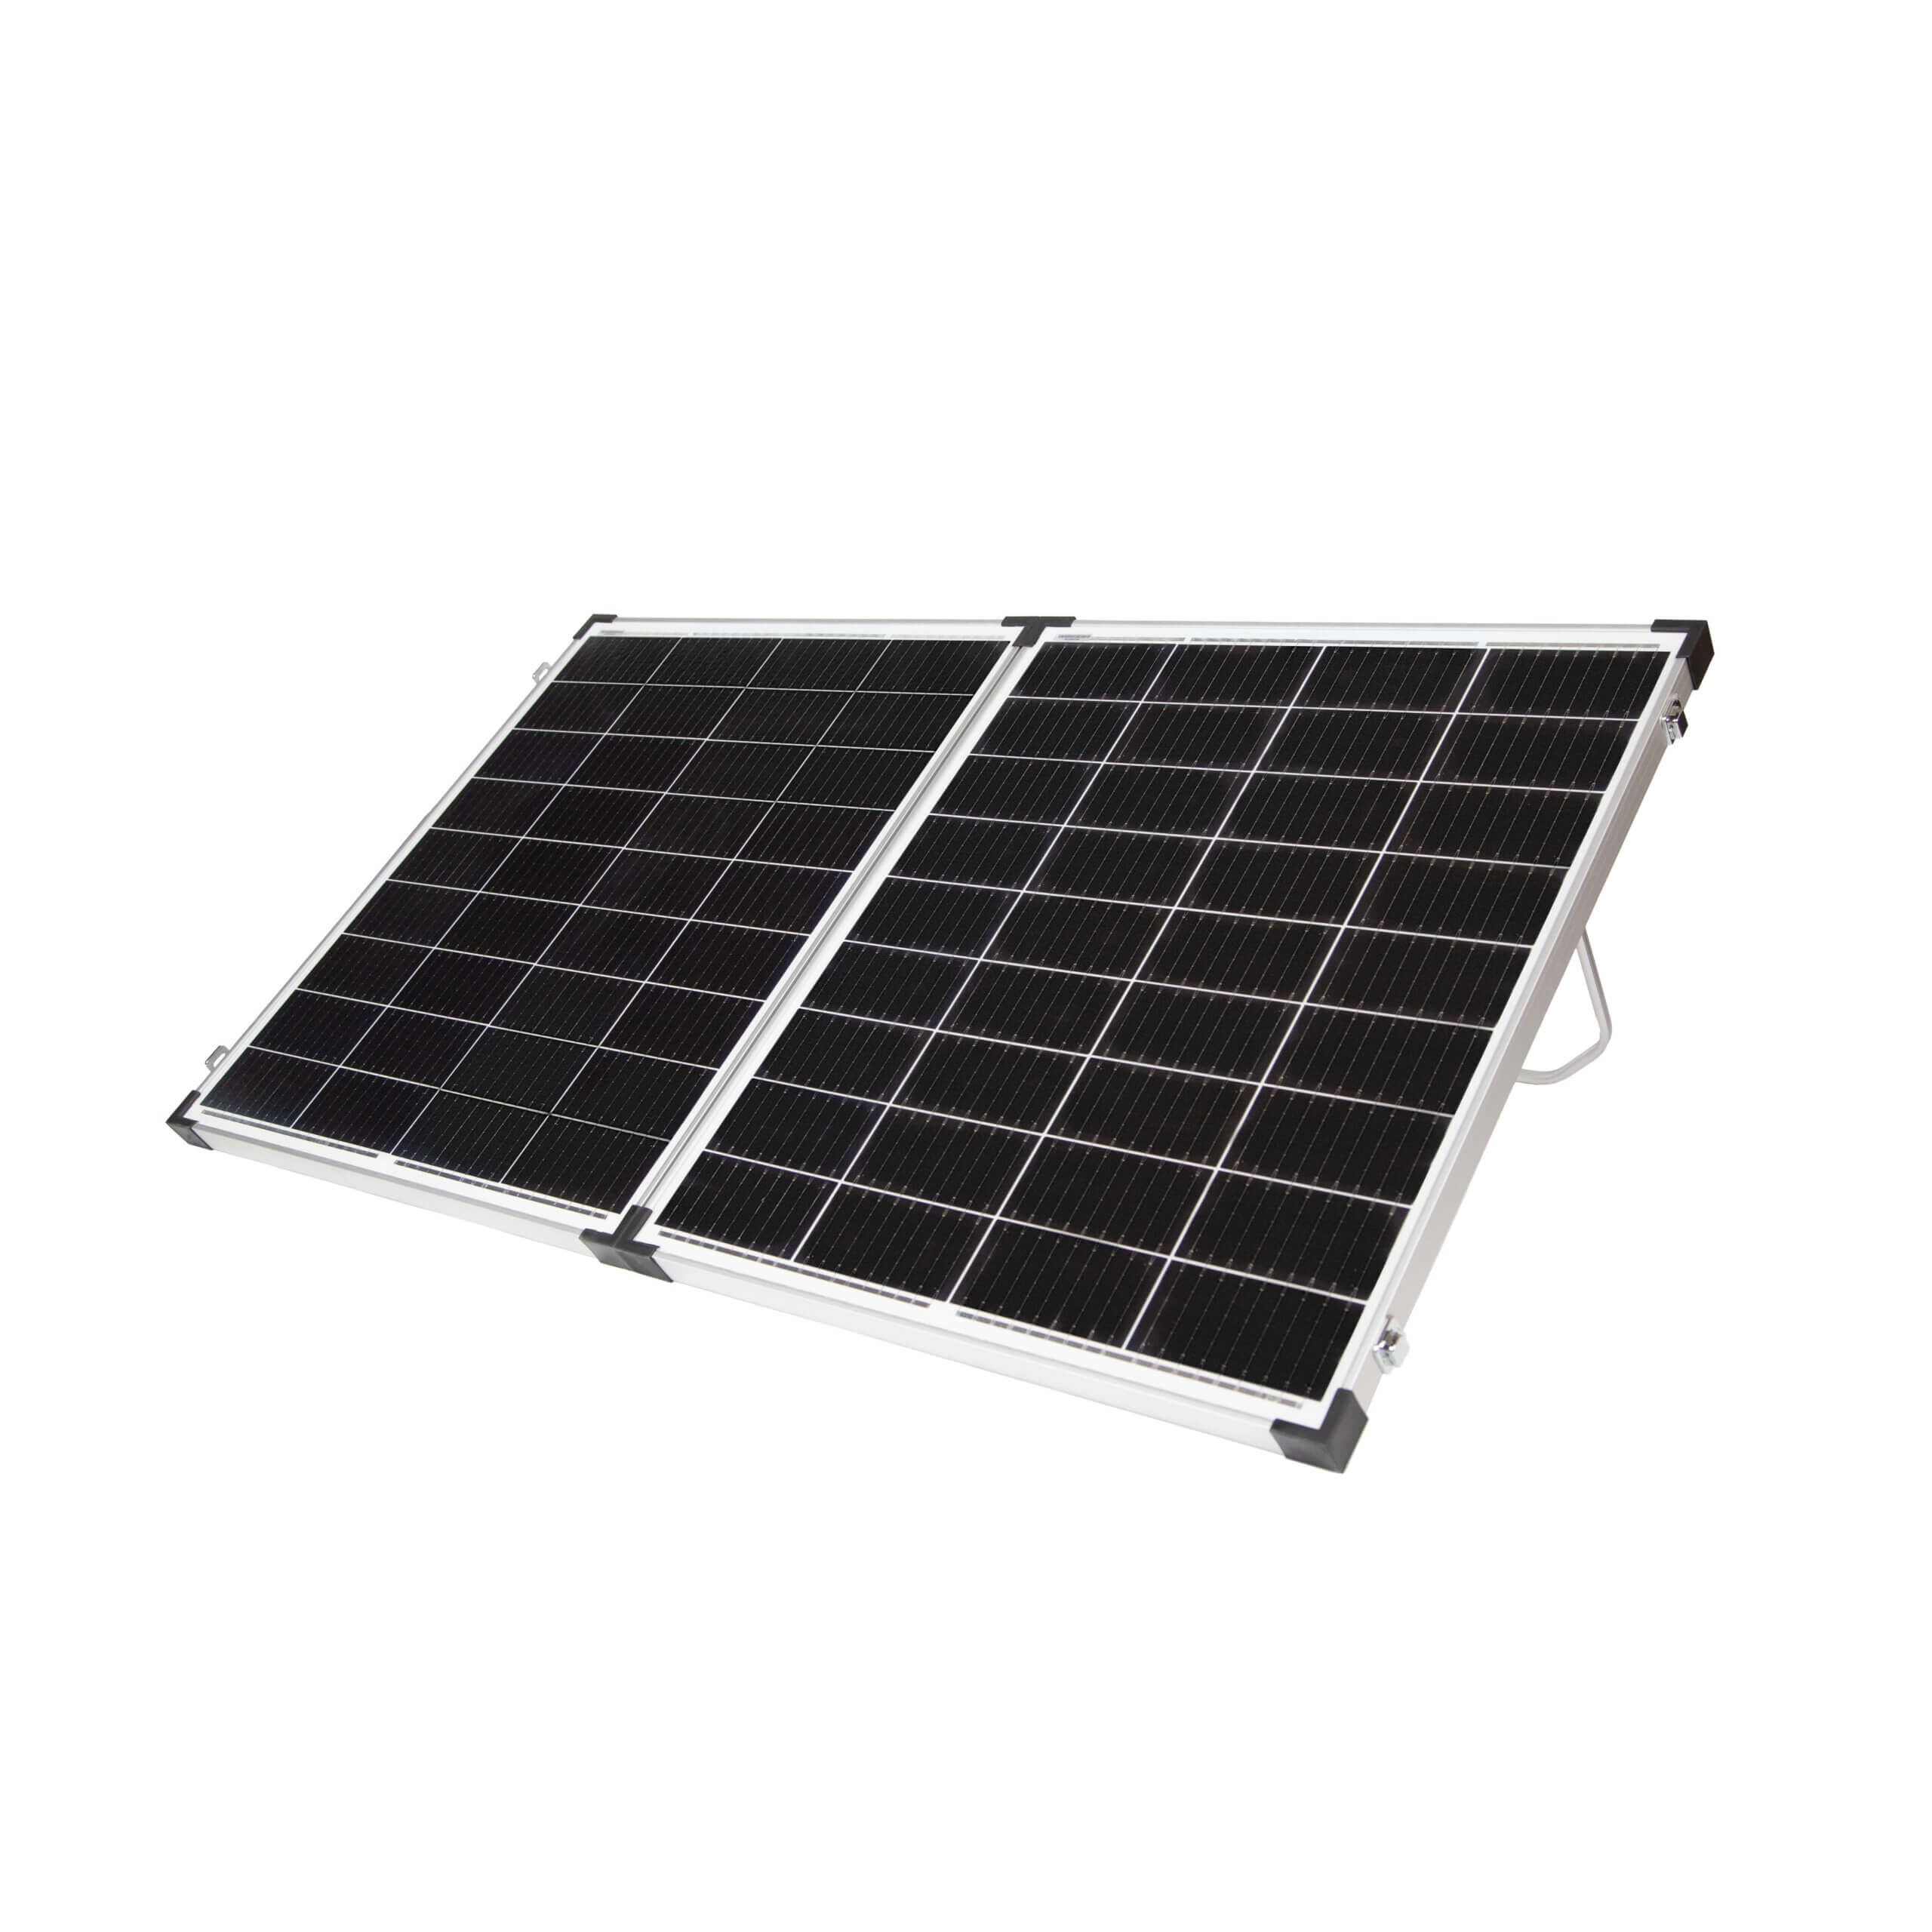 Briefcase solar panels